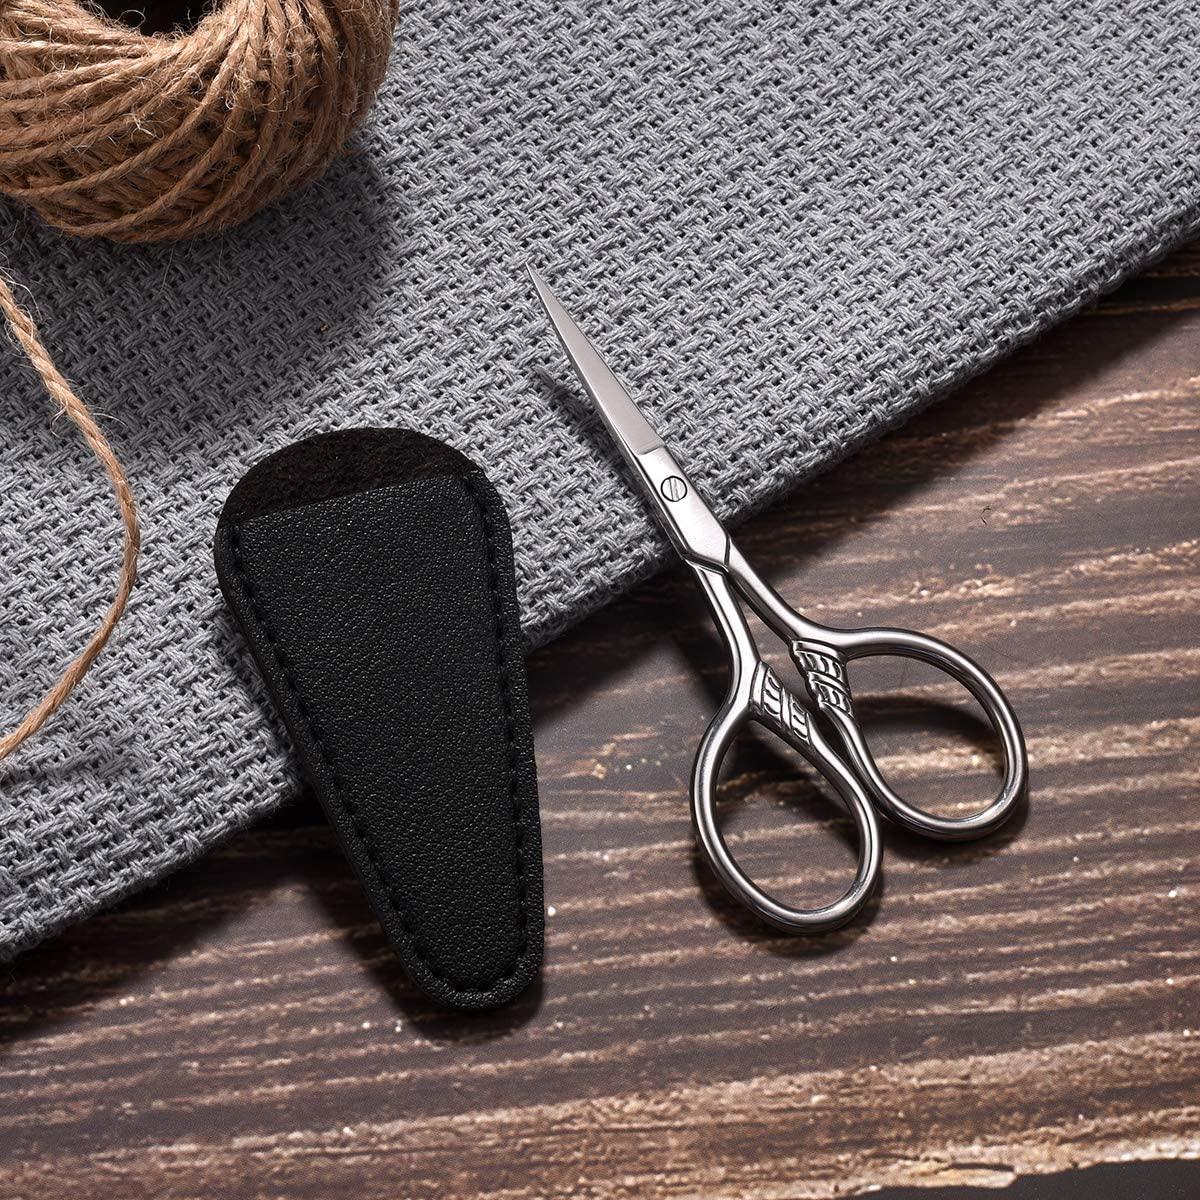 3.5 Kit/Pocket Style Shears / Scissors